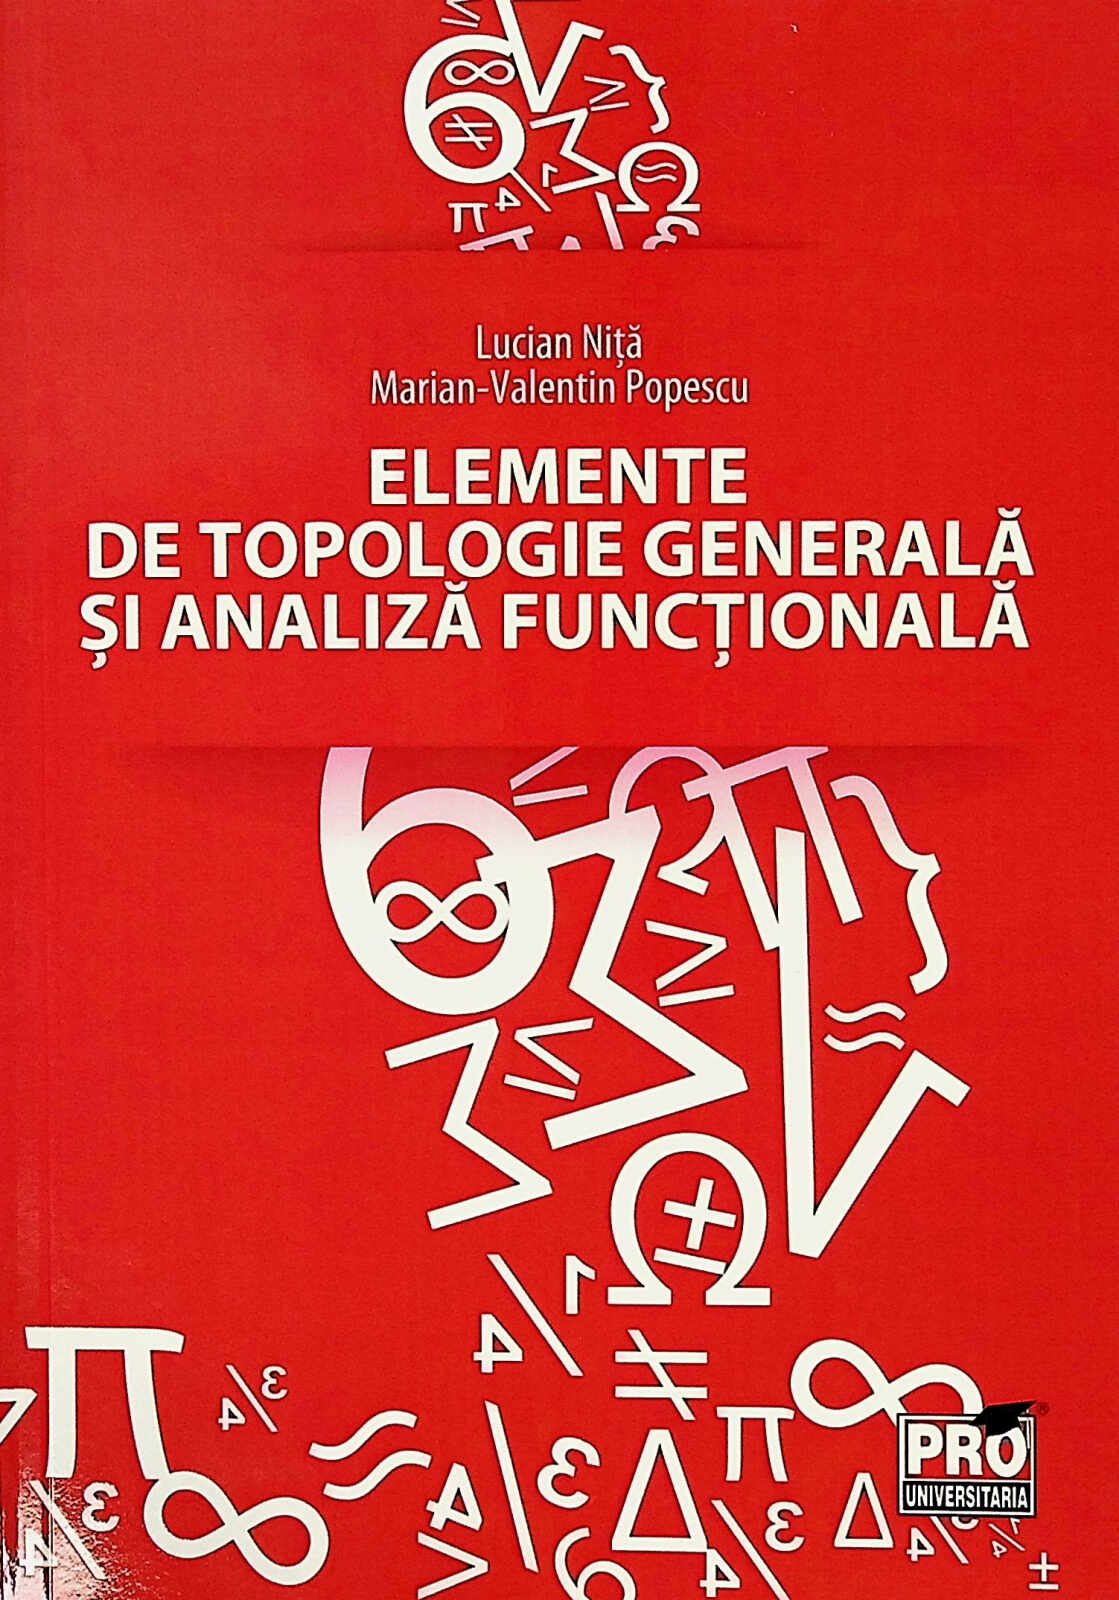  Elemente de topologie generala si analiza functionala | Marian-Valentin Popescu, Lucian Nita